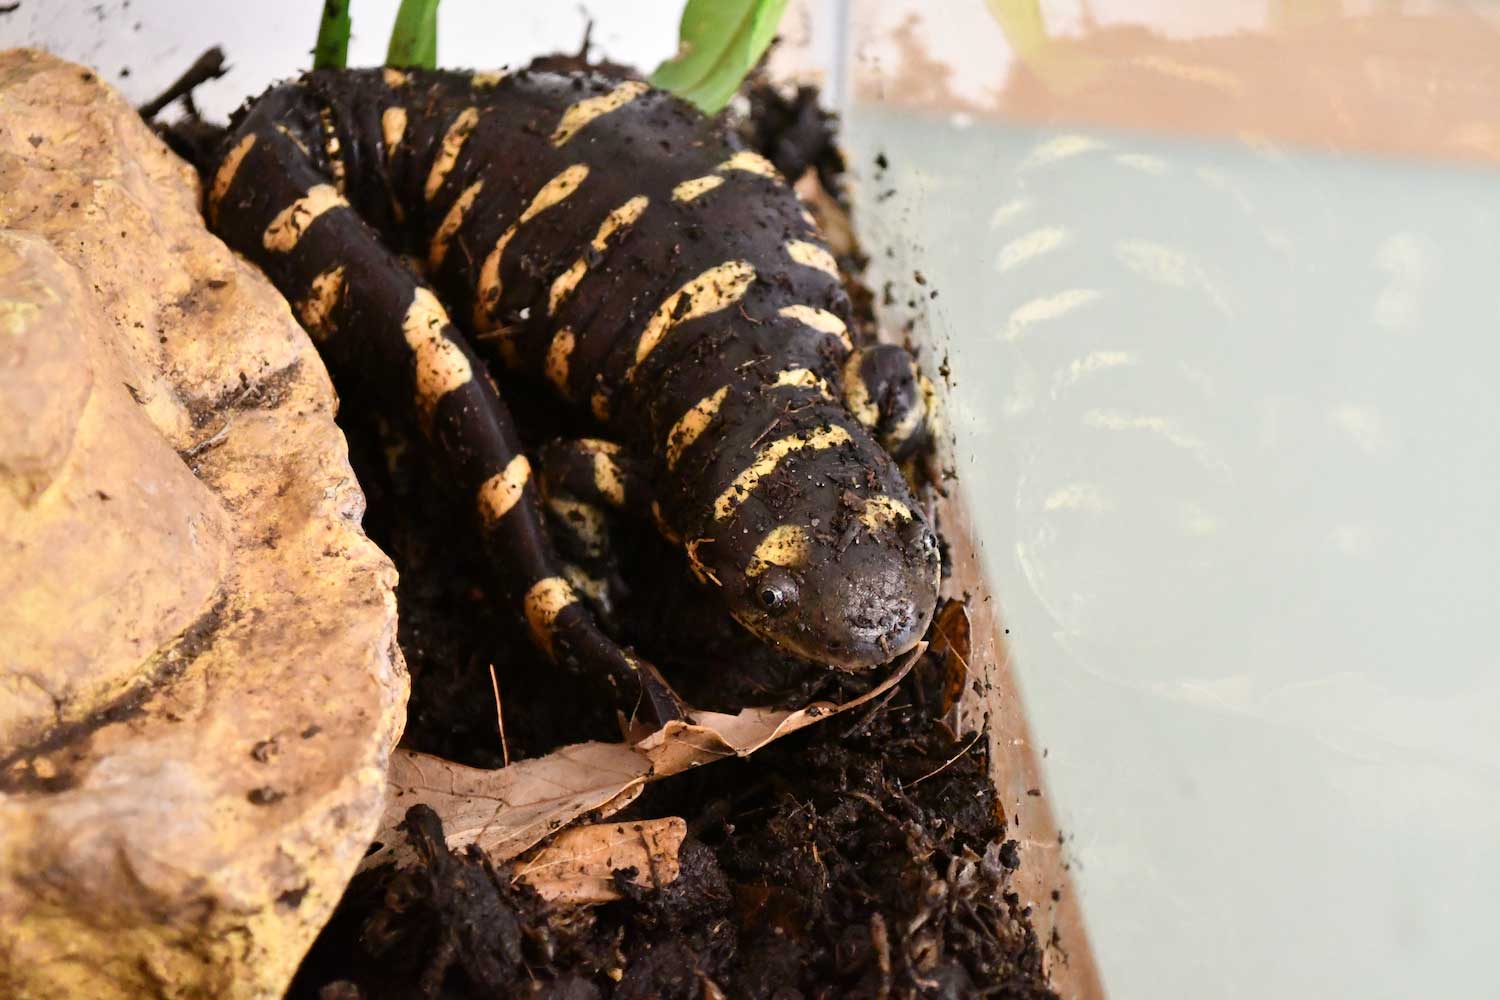 A tiger salamander on a rock in its tank.